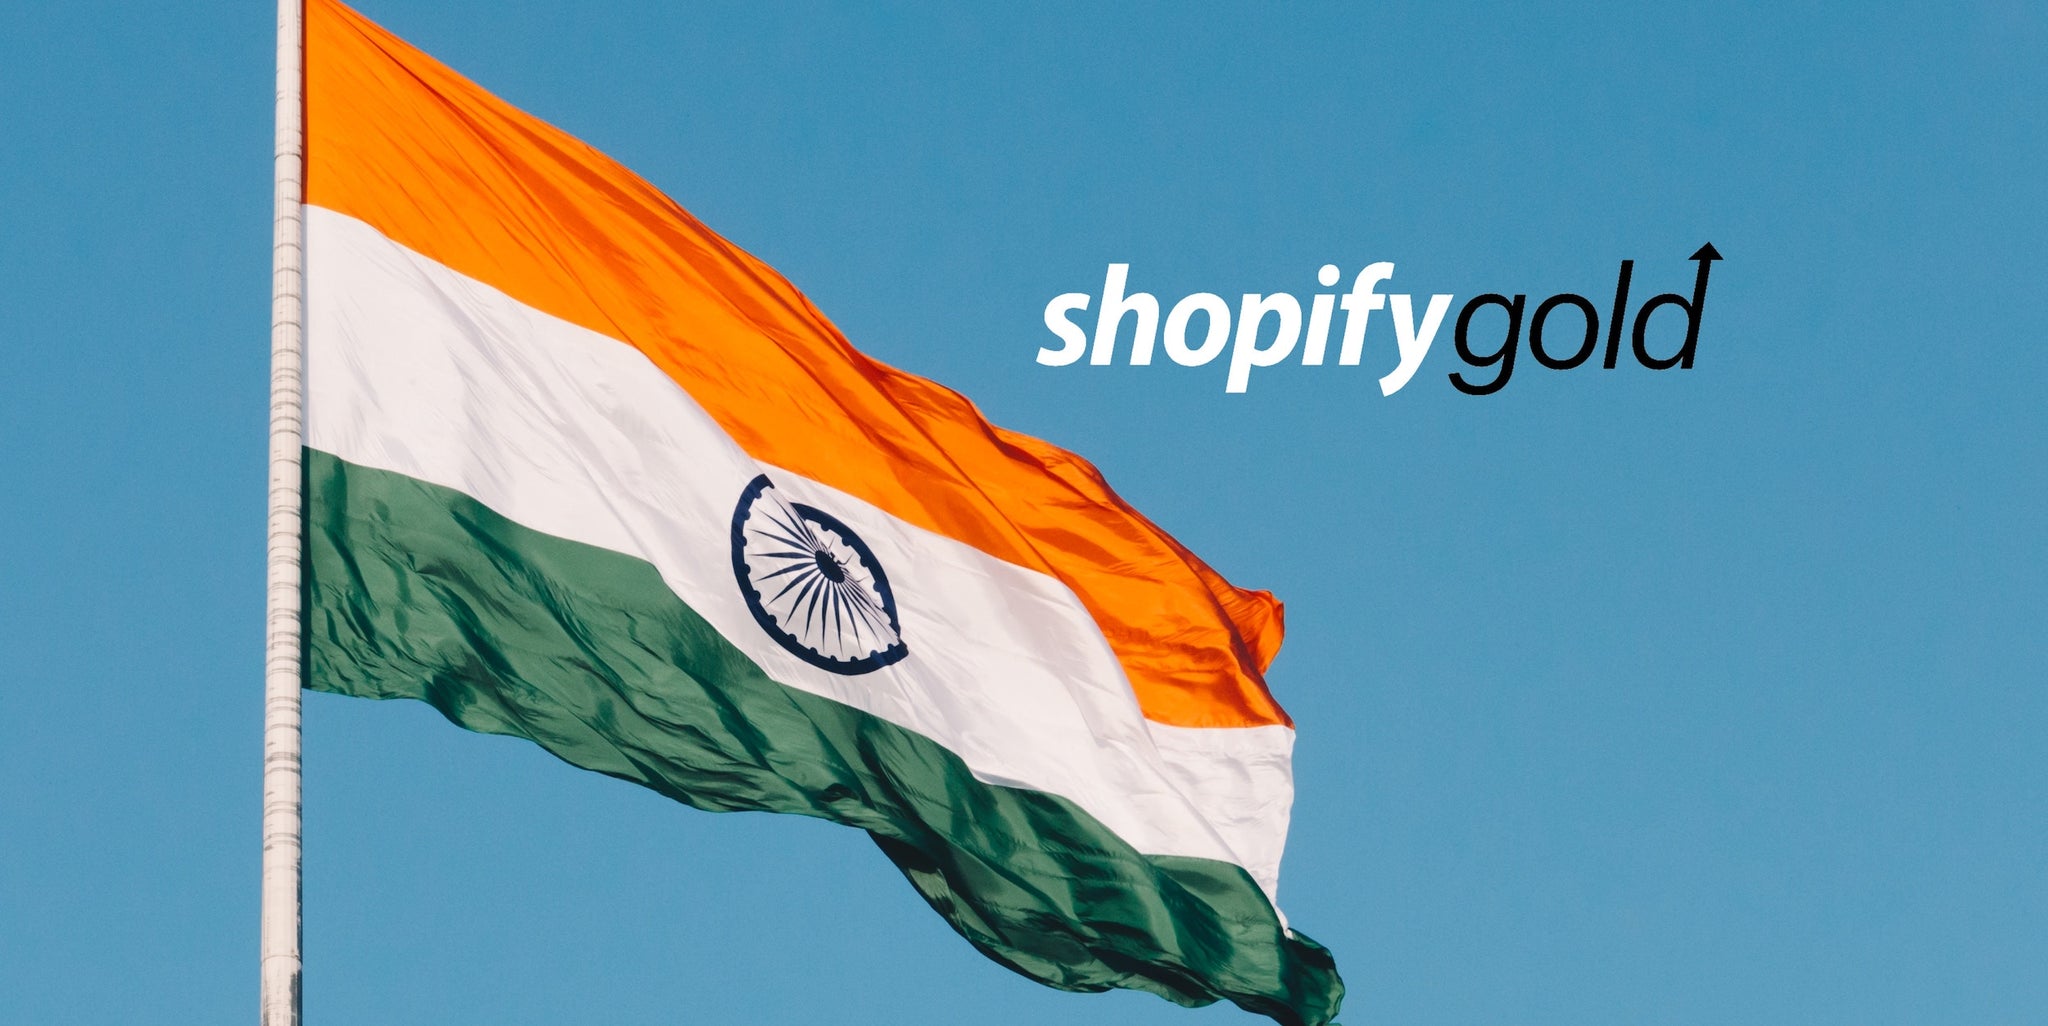 Shopify Gold: India's Enterprise eCommerce Solution